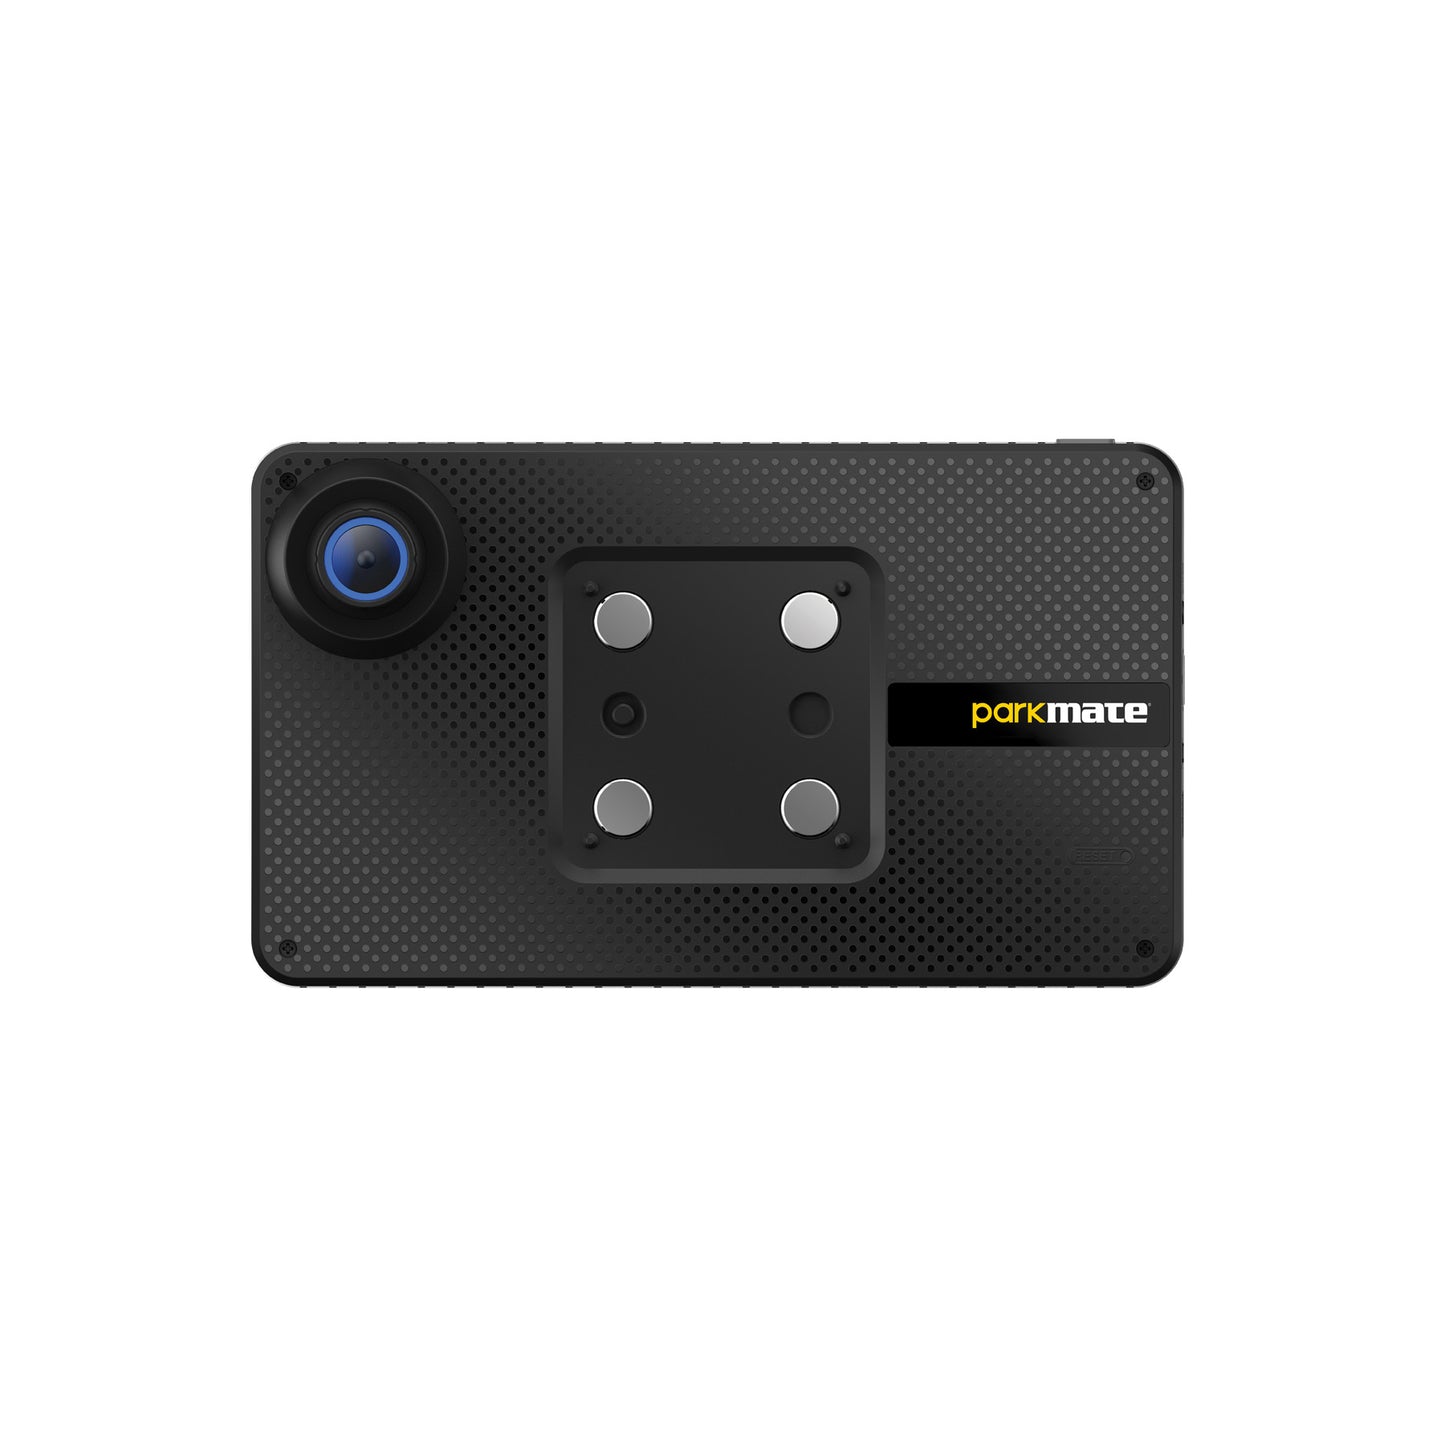 Smart Screen Monitor with 2-Channel Dash Camera